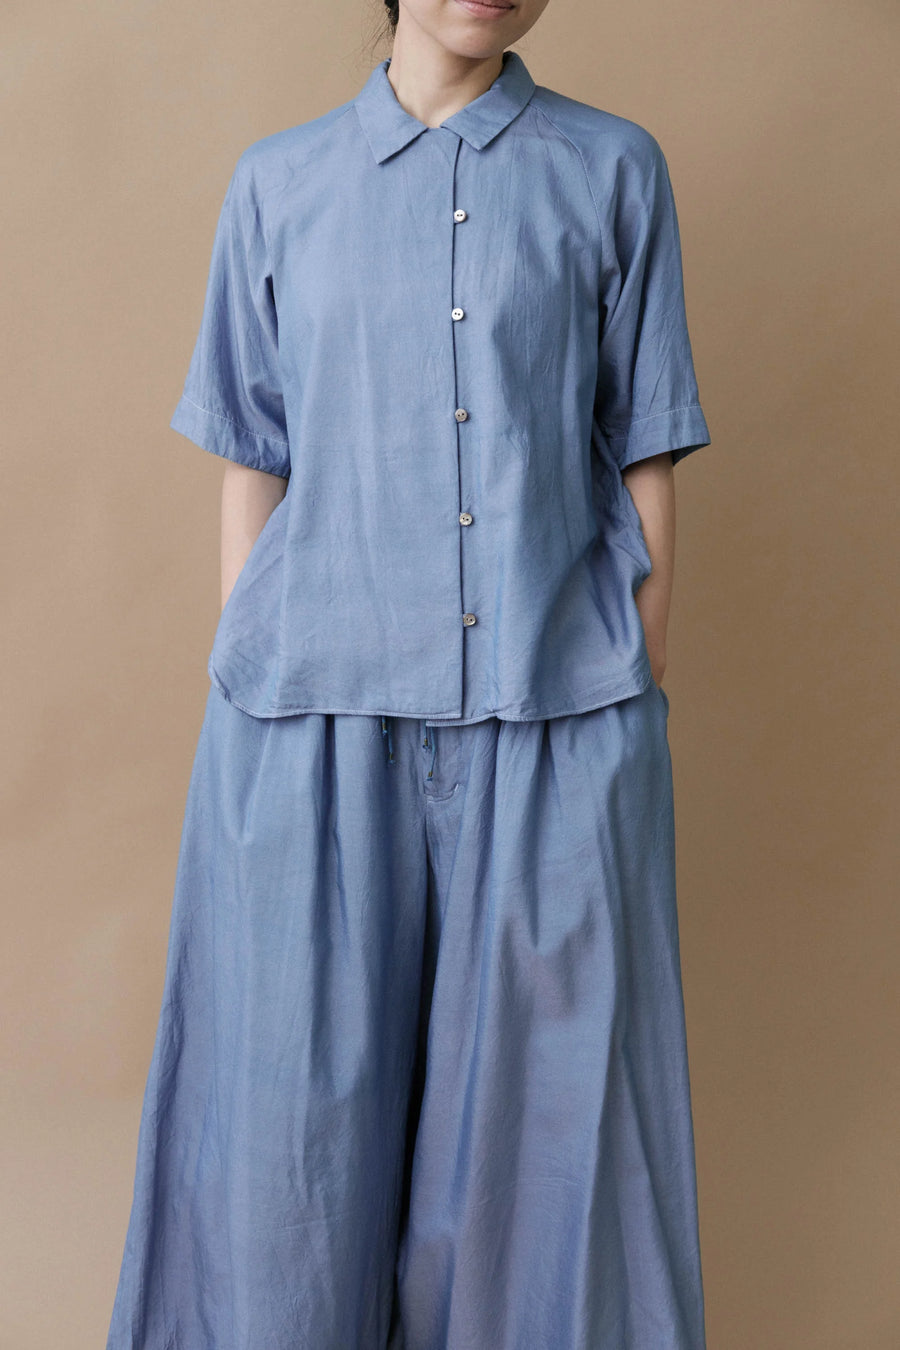 incense 本藍染オープンカラーシャツ(藍)